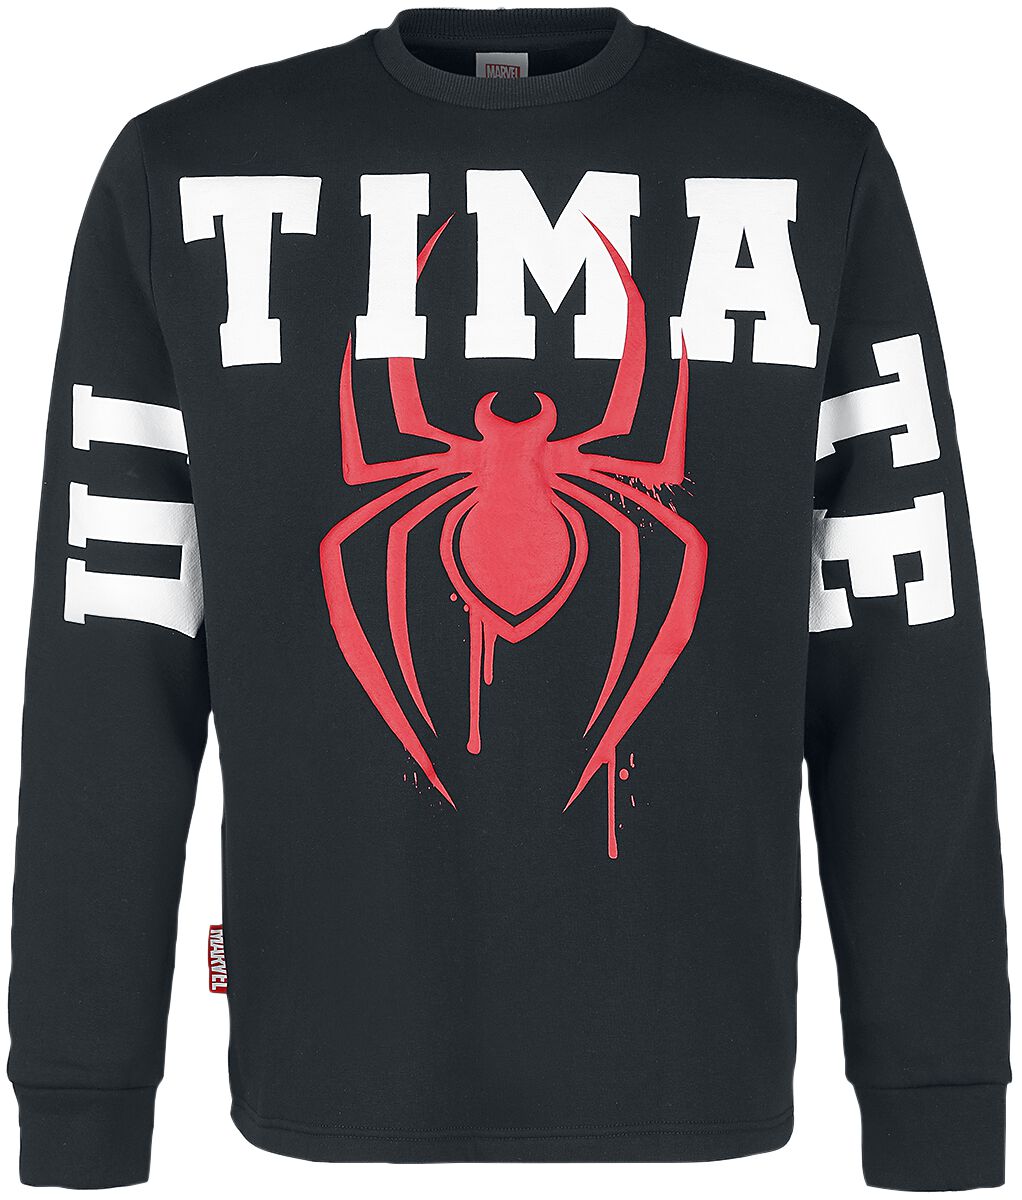 Spider-Man Ultimate Logo Sweatshirt schwarz in S